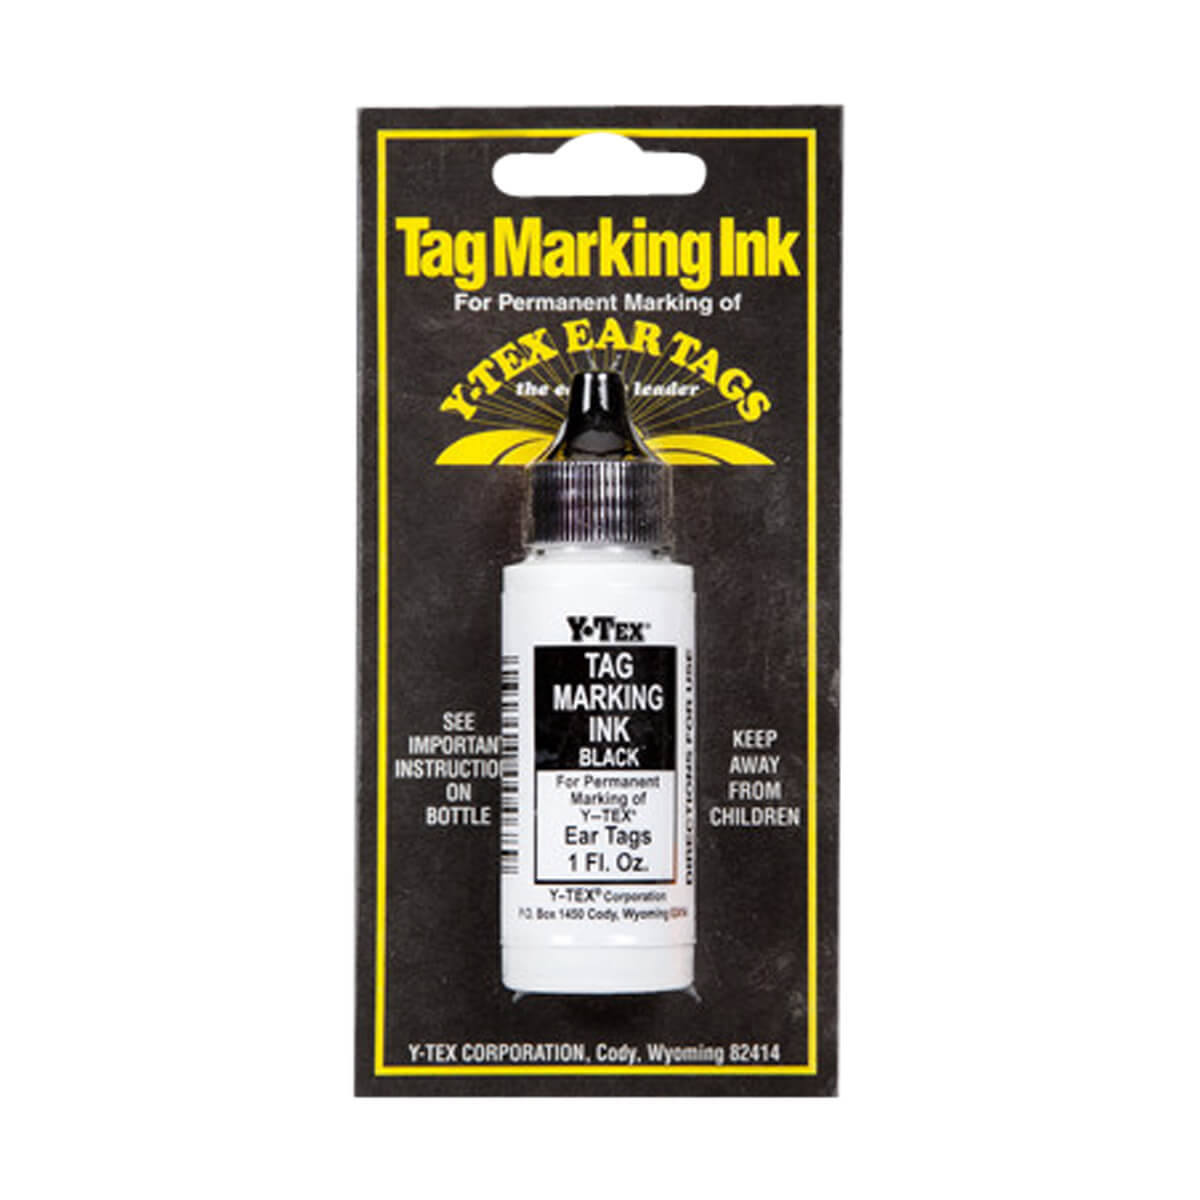 Y-Tex Tag Marking Ink - Black